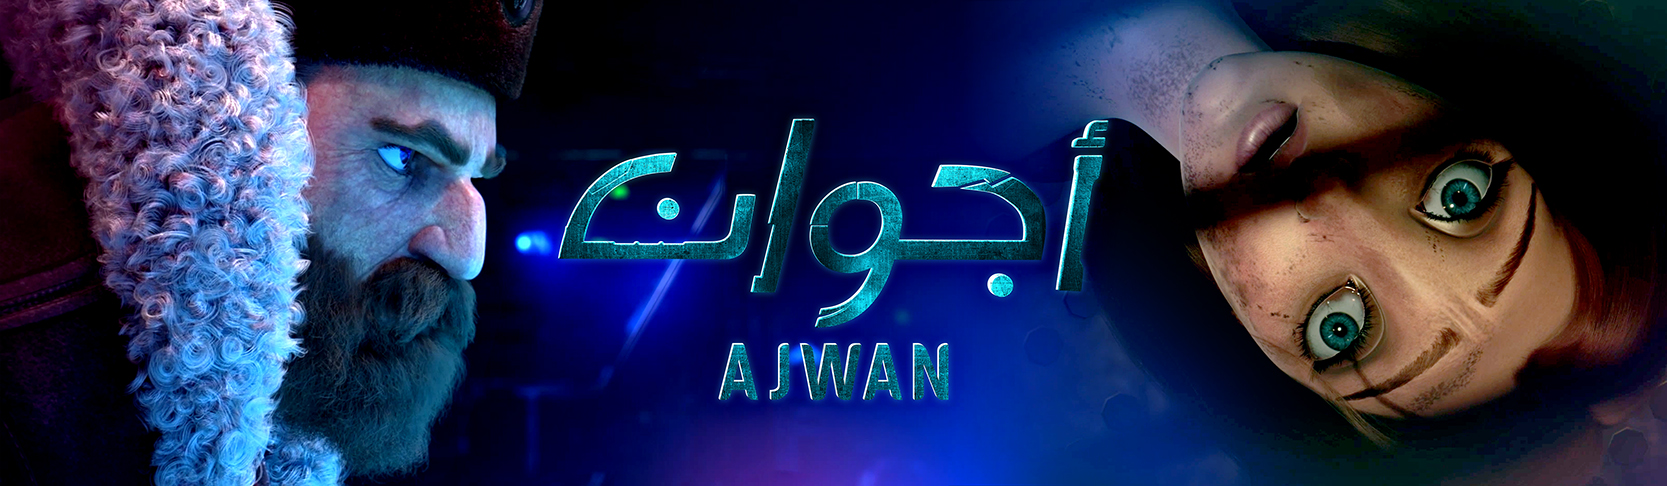 ajwan-cover image